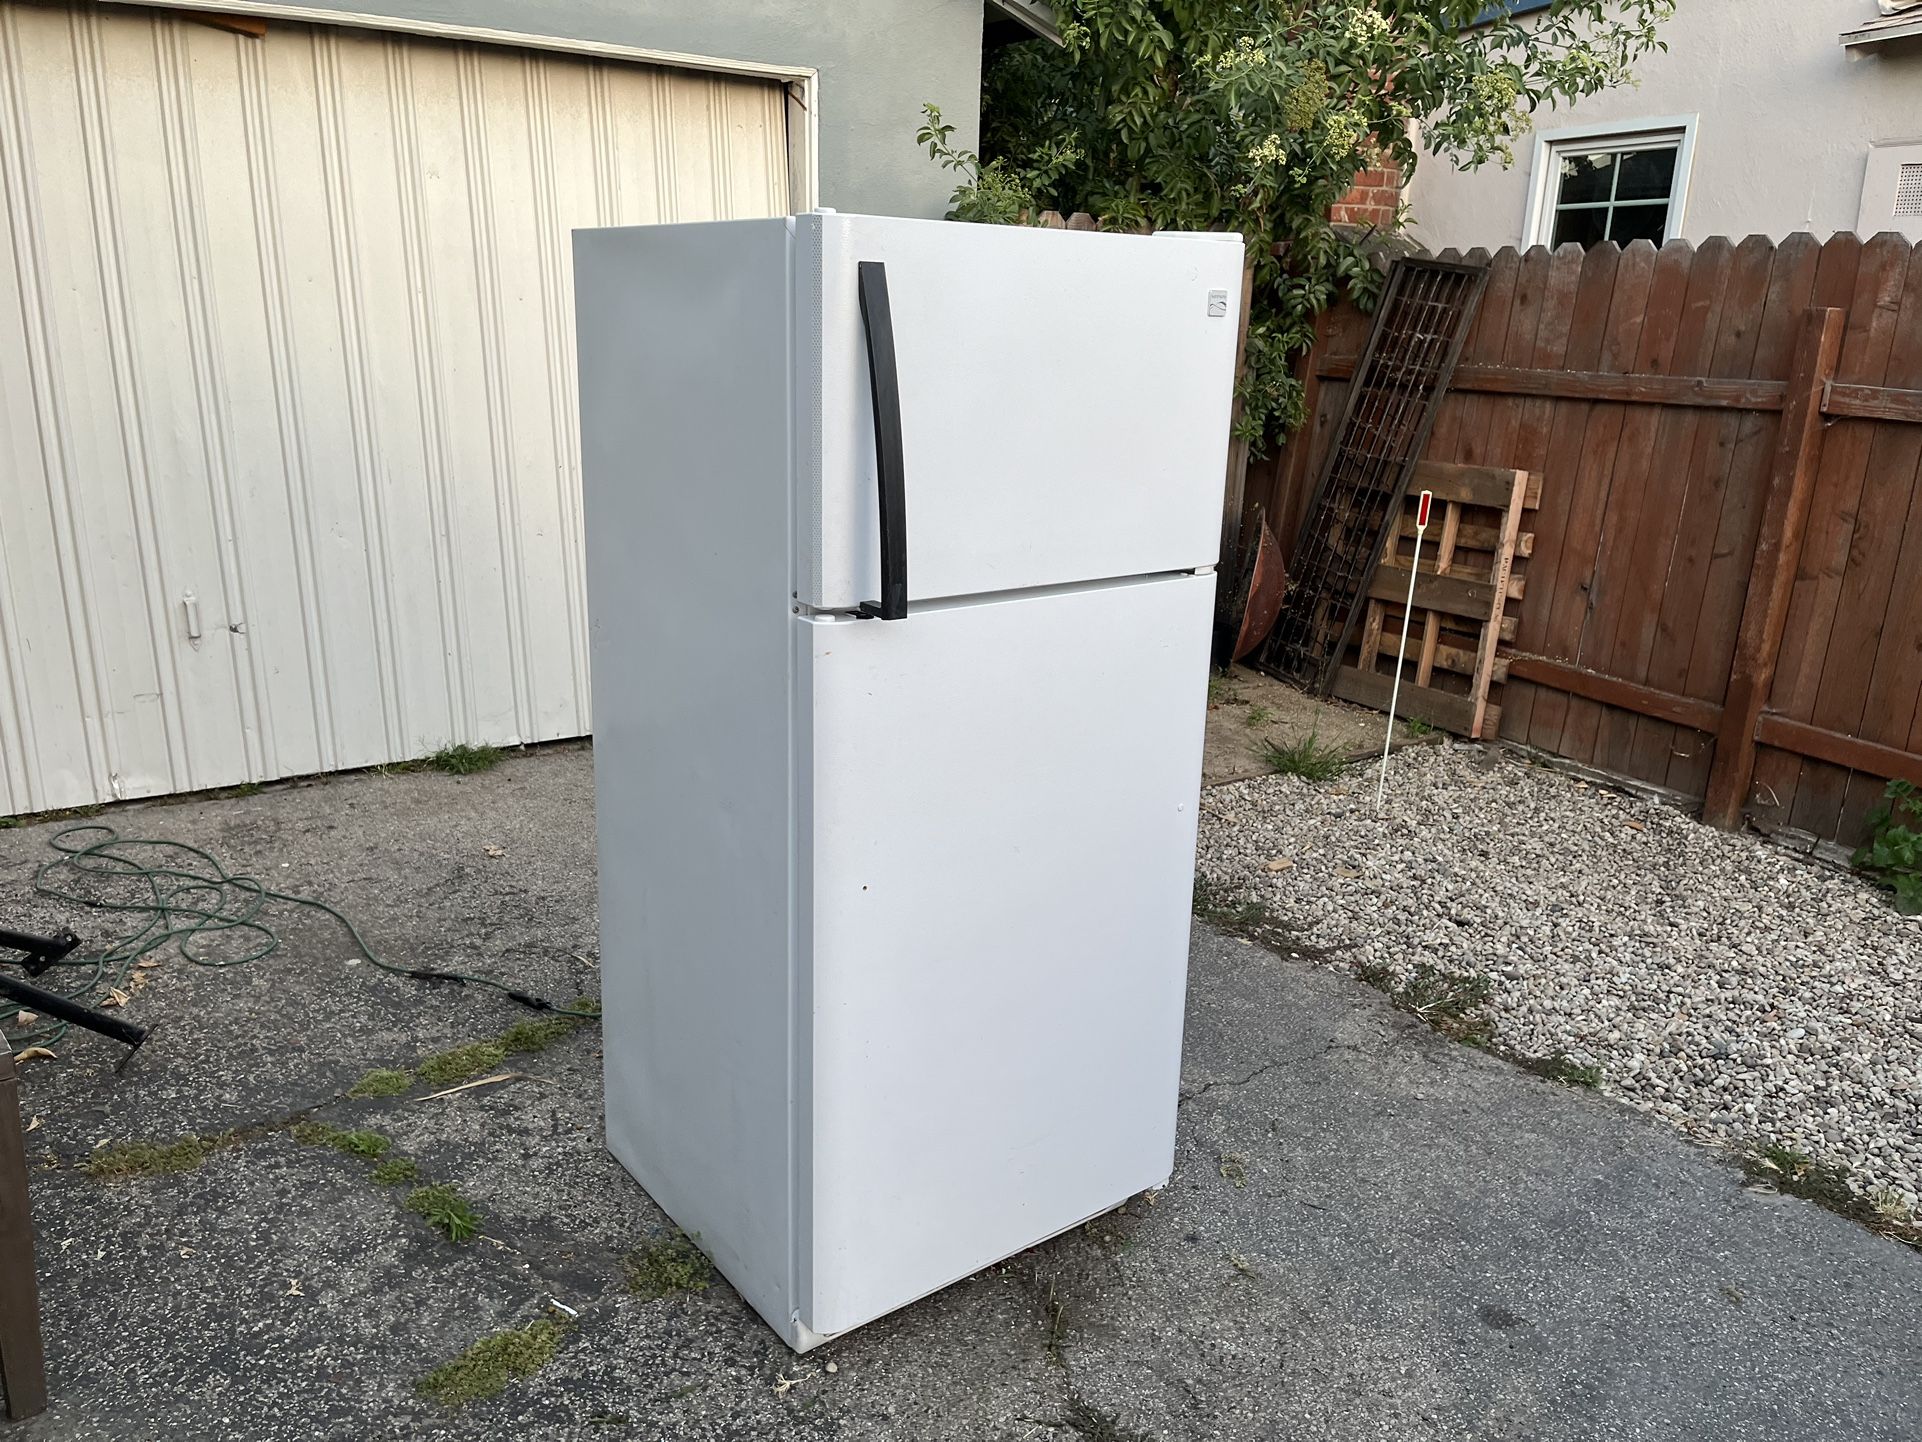 Fridge / Refrigerator / Freezer: Sears Kenmore 